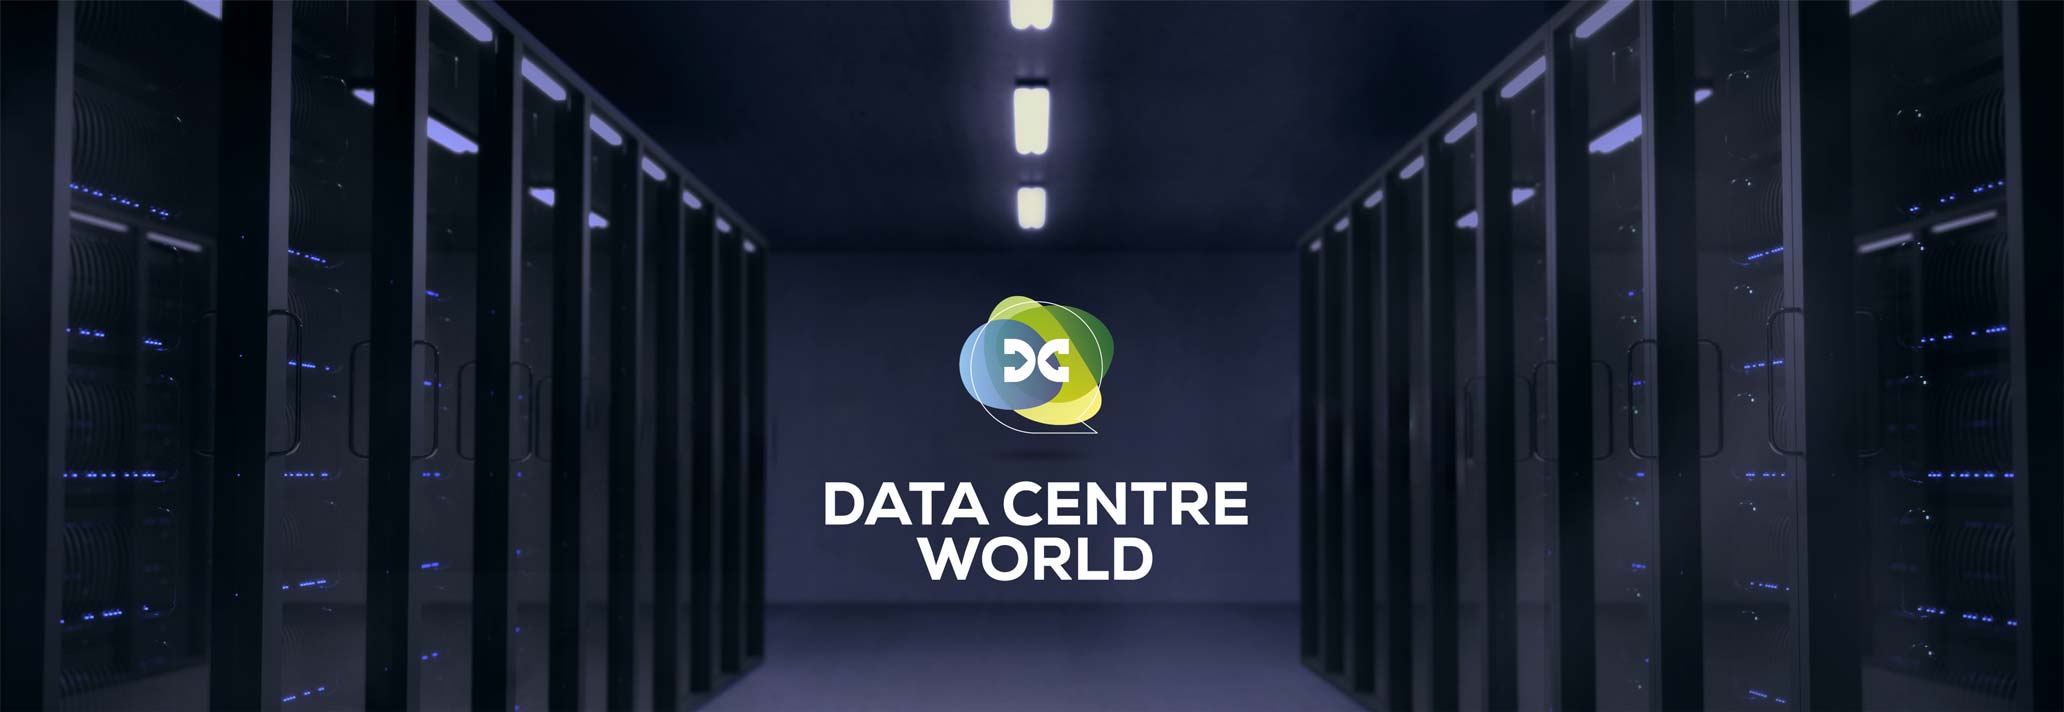 Data Centre World - Cloud Expo Event